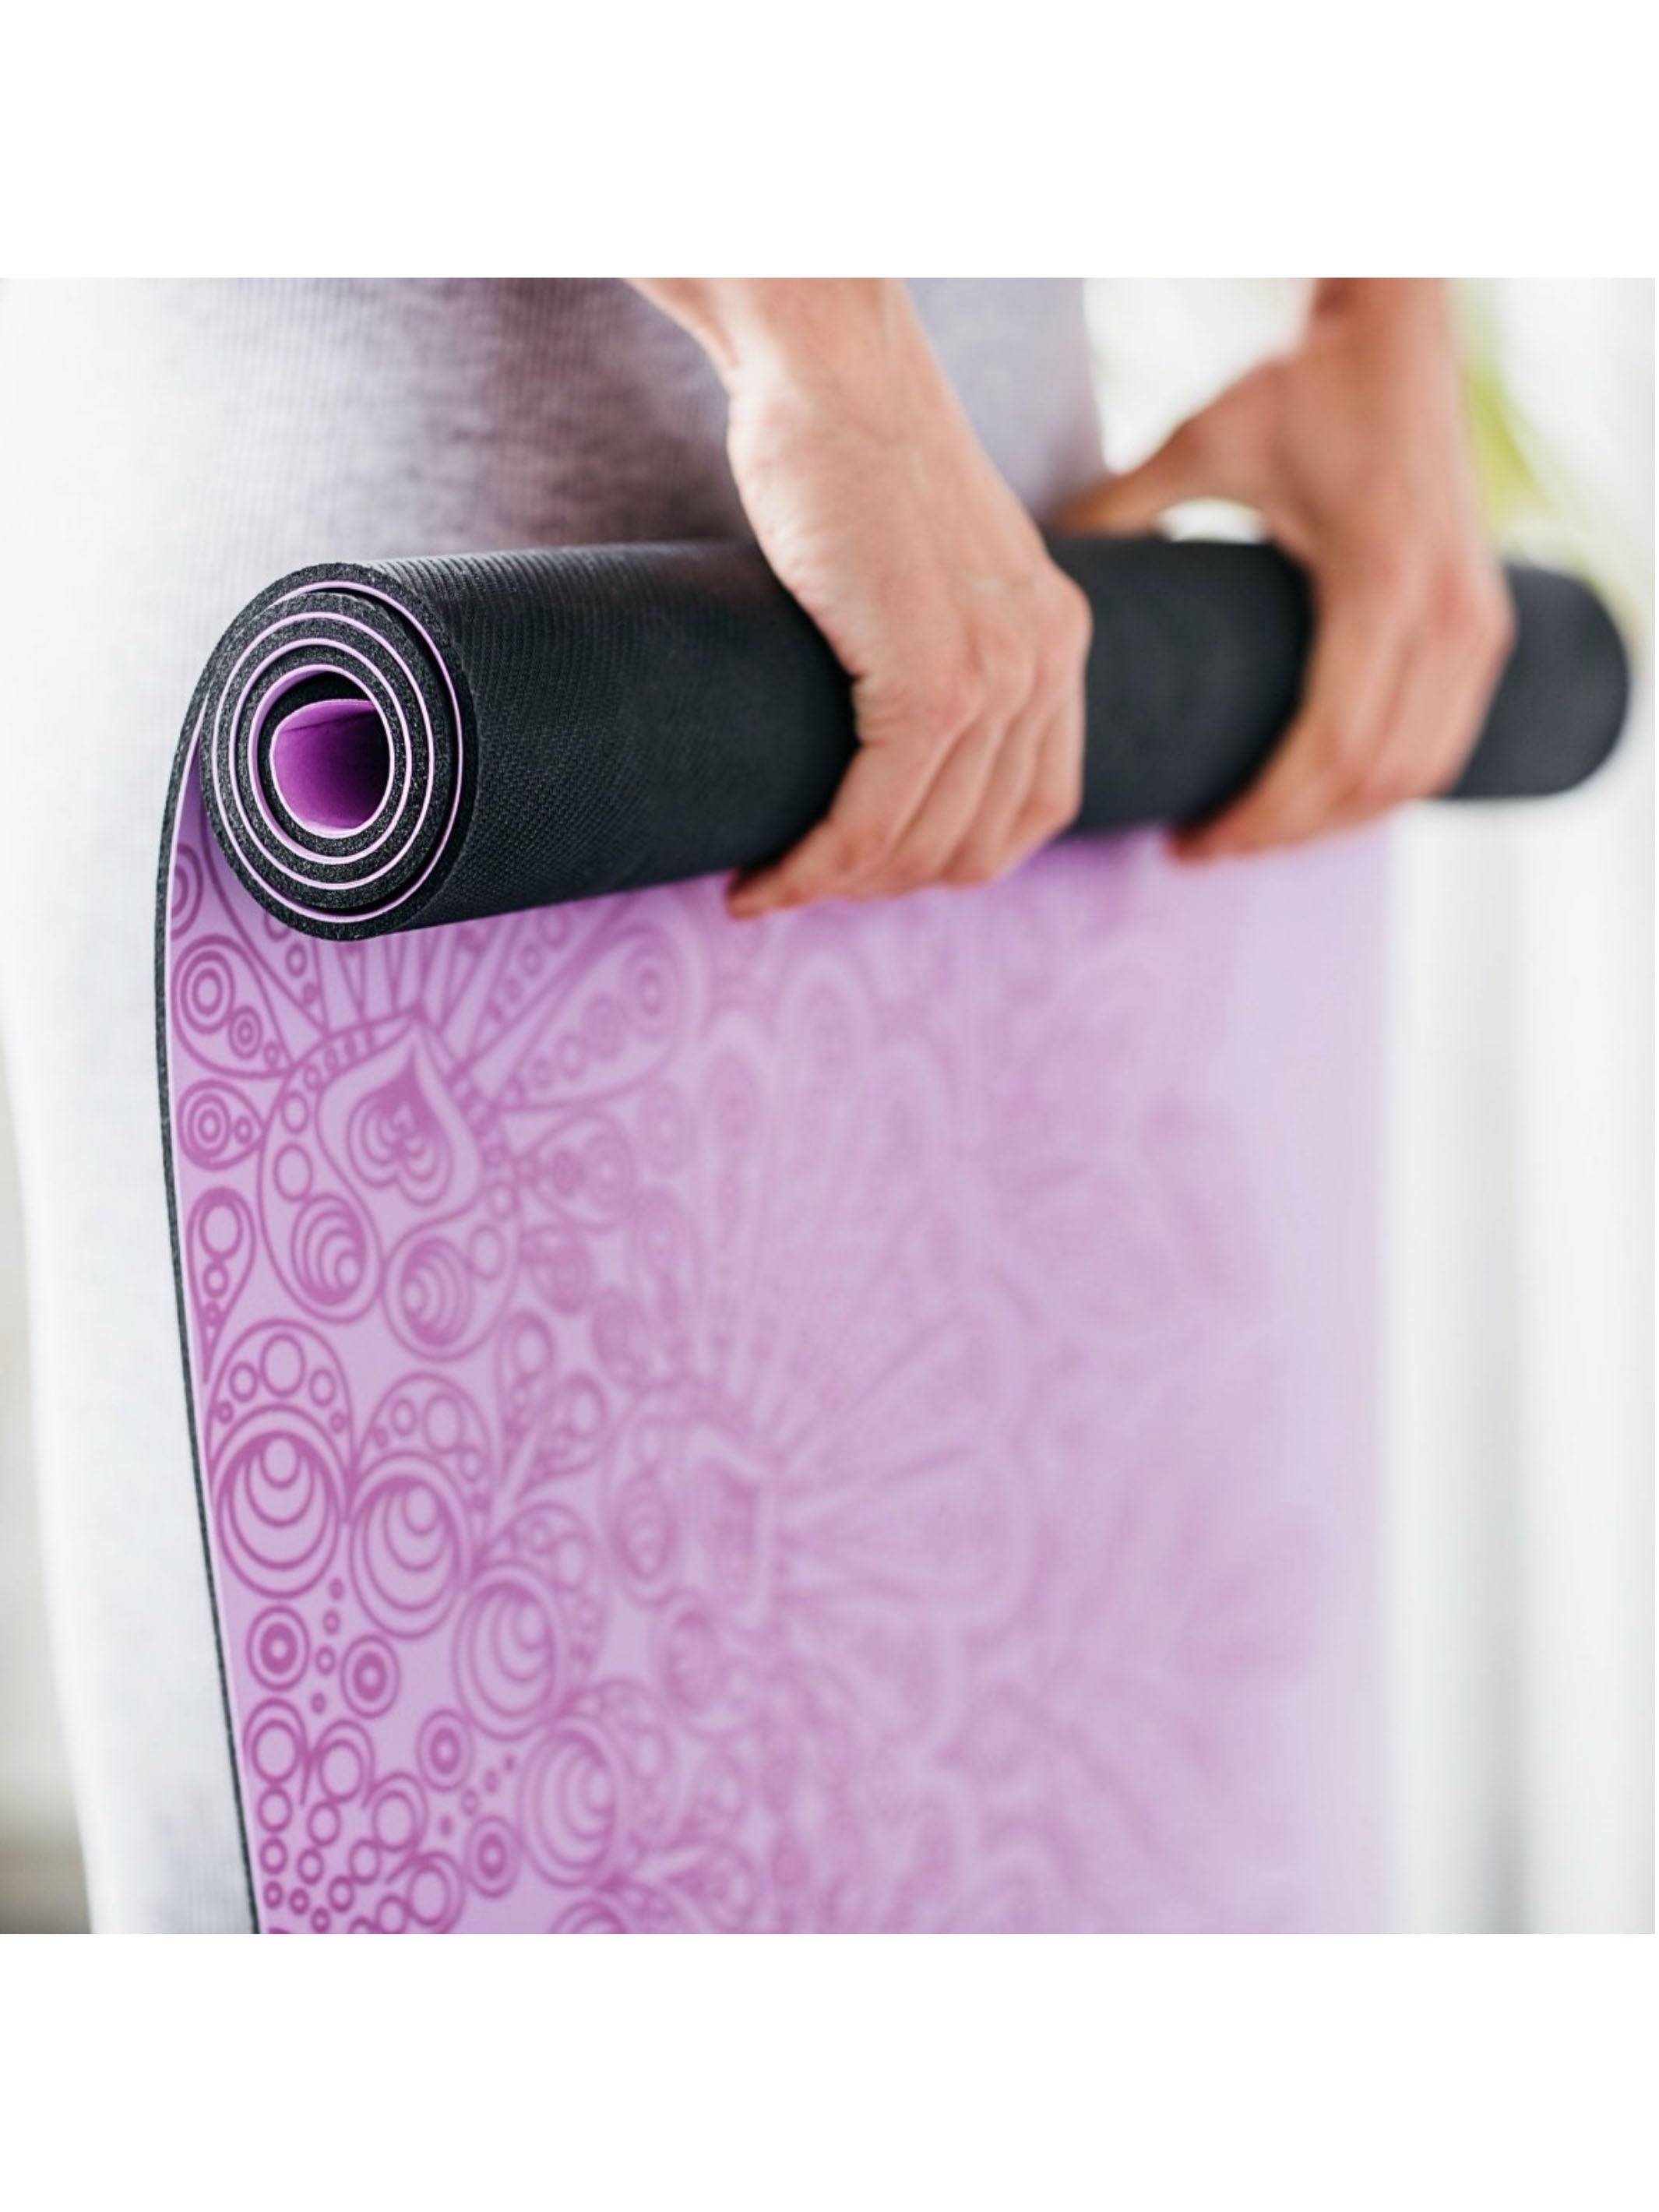 Gaiam Yoga for Beginners, Purple, Yoga Mat and Strap